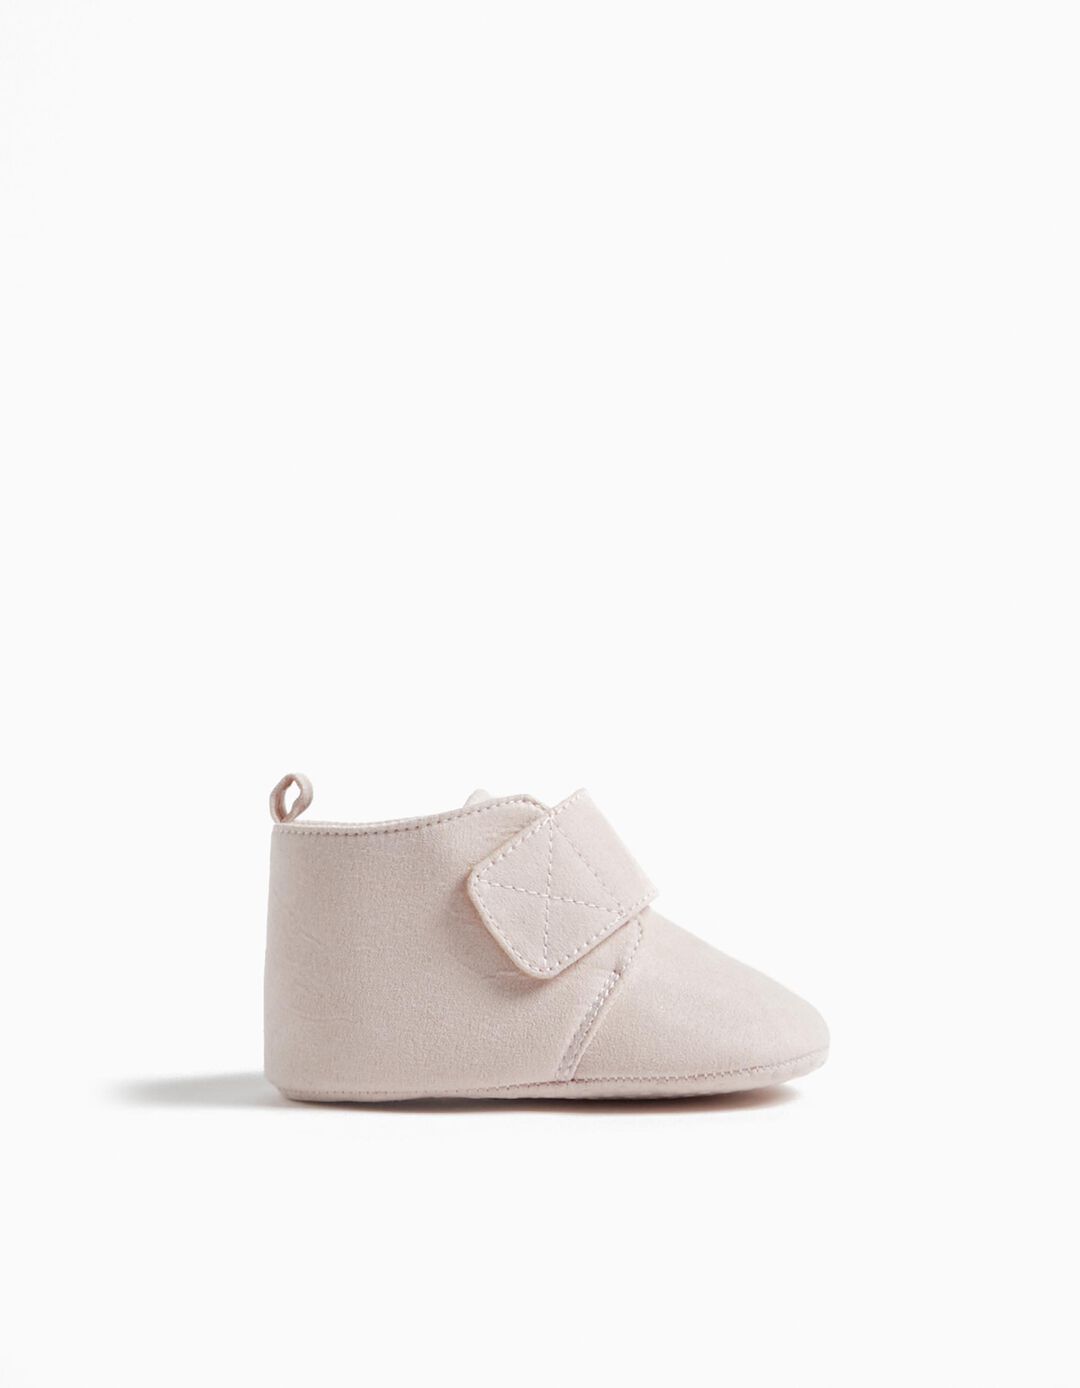 Boot slippers, Baby Girl, Light Pink